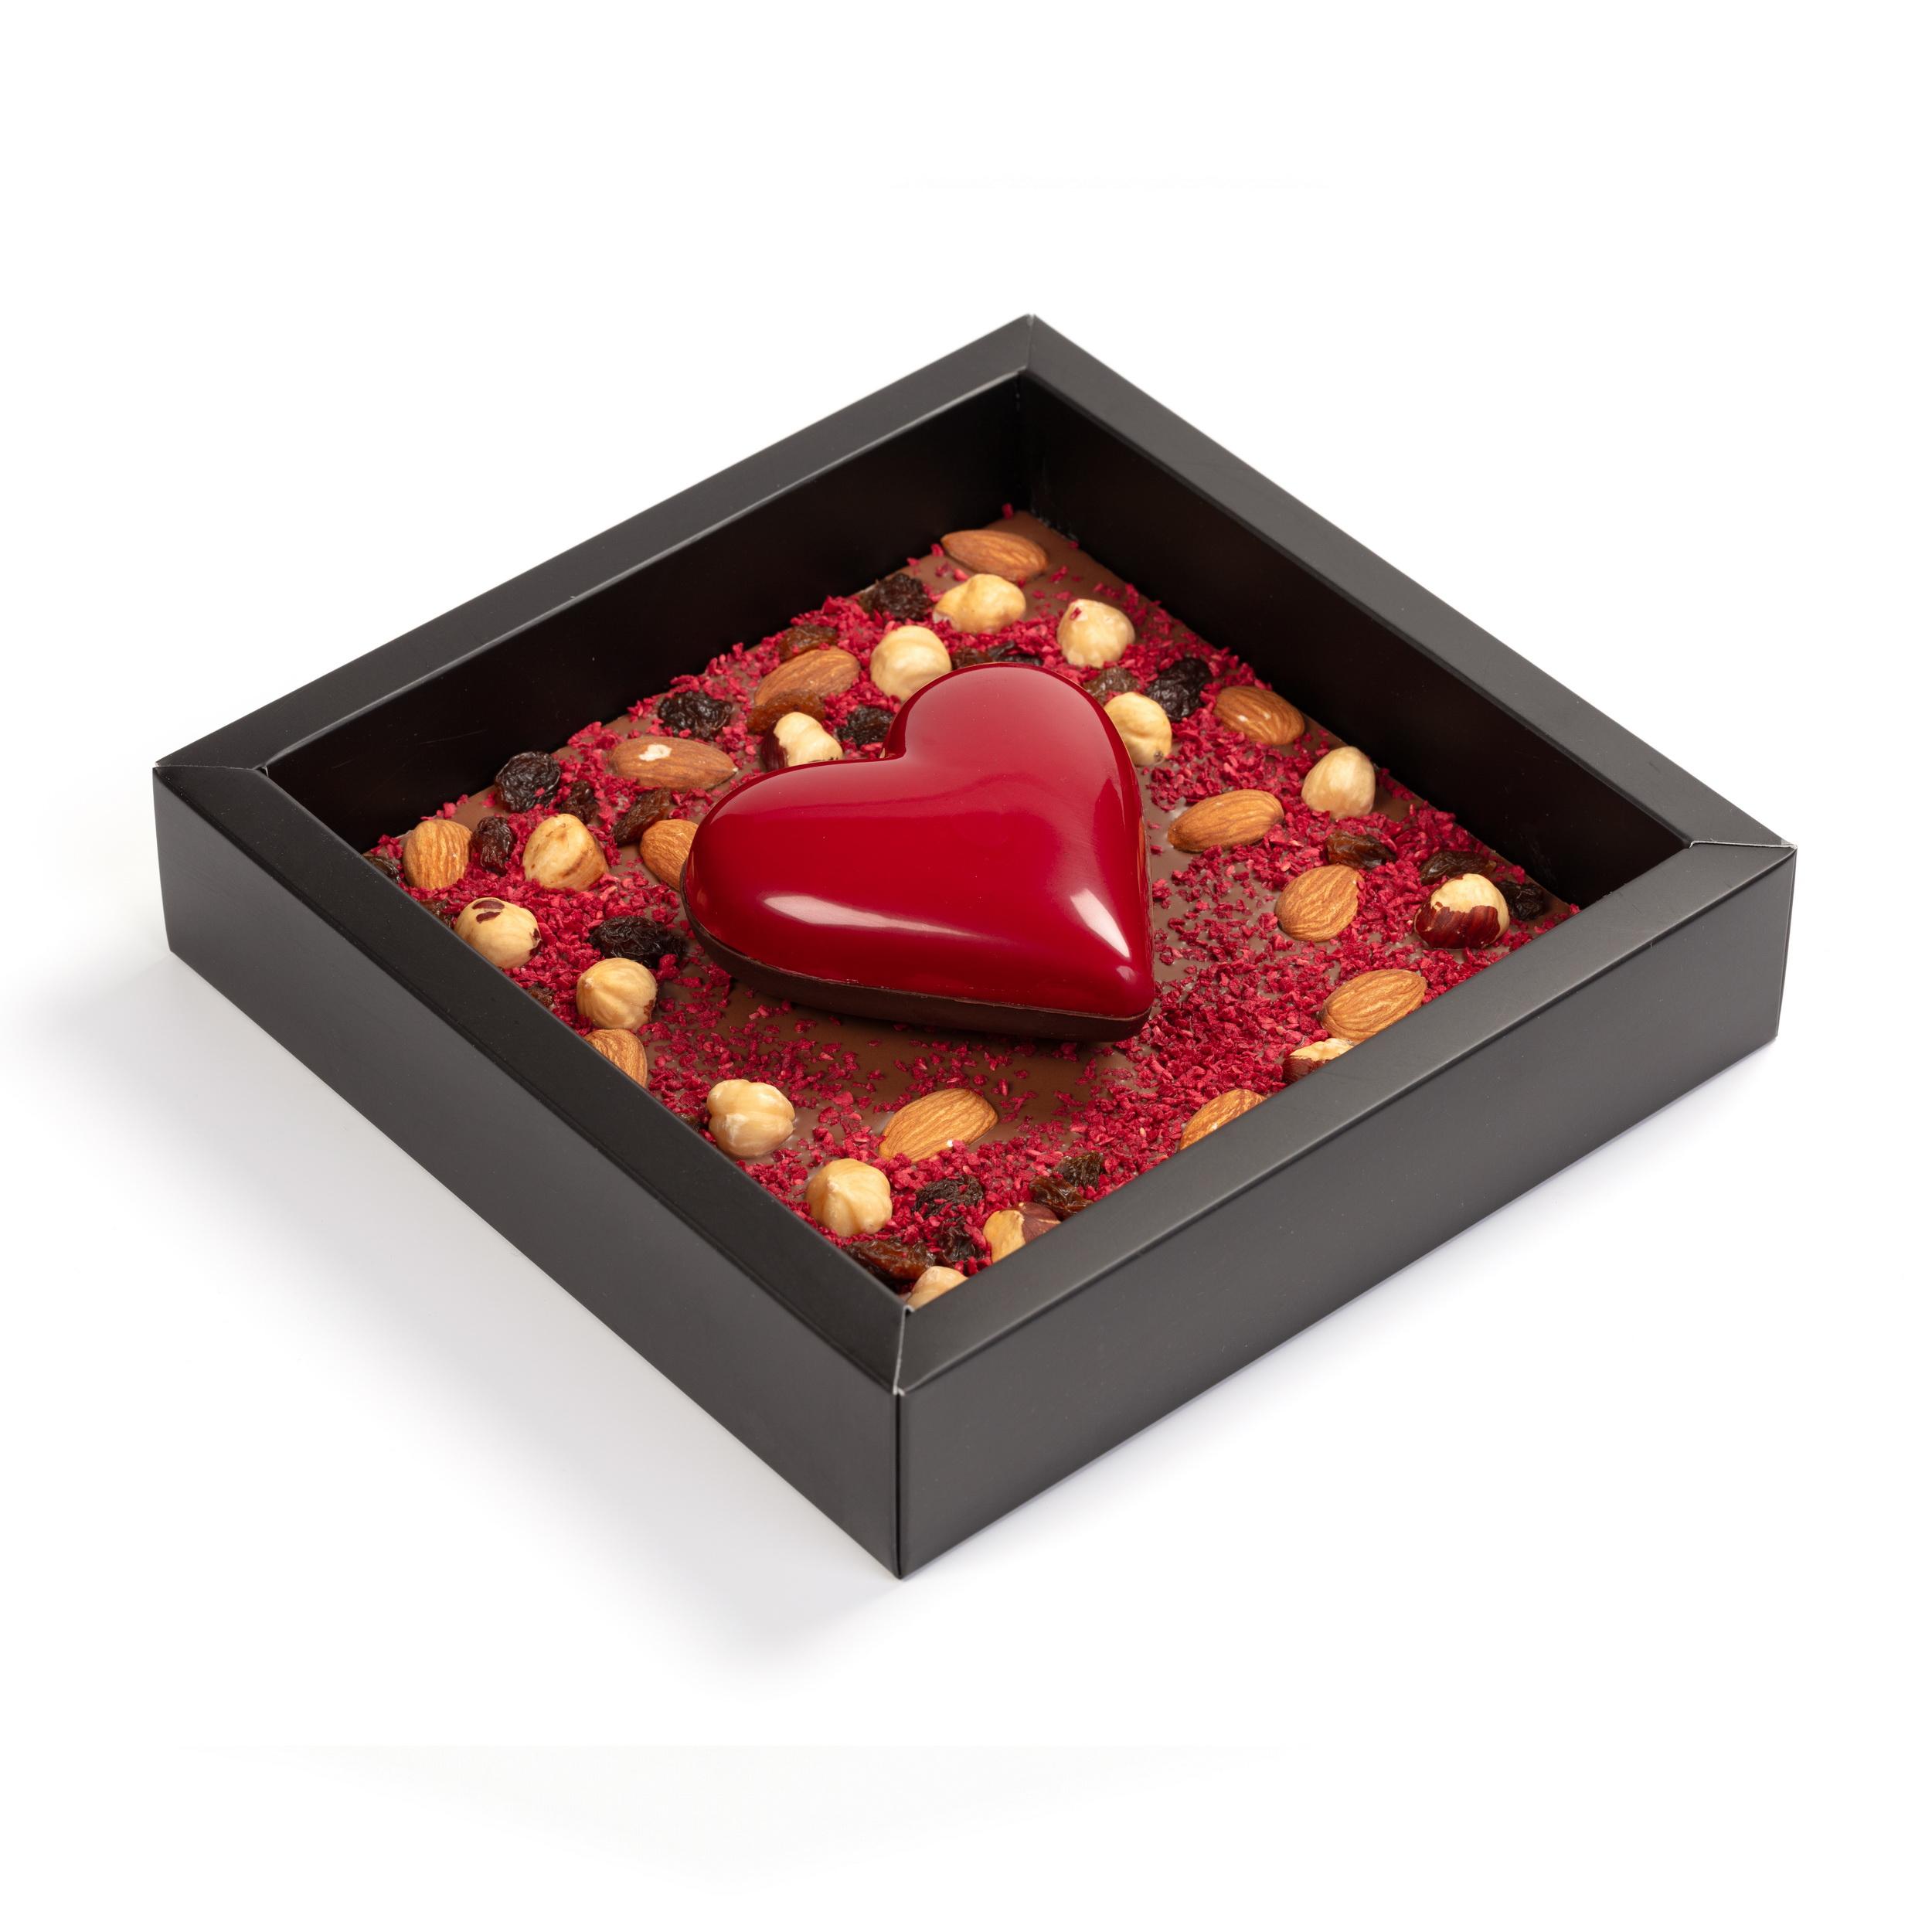 Tableta Marteaux Heart of chocolate